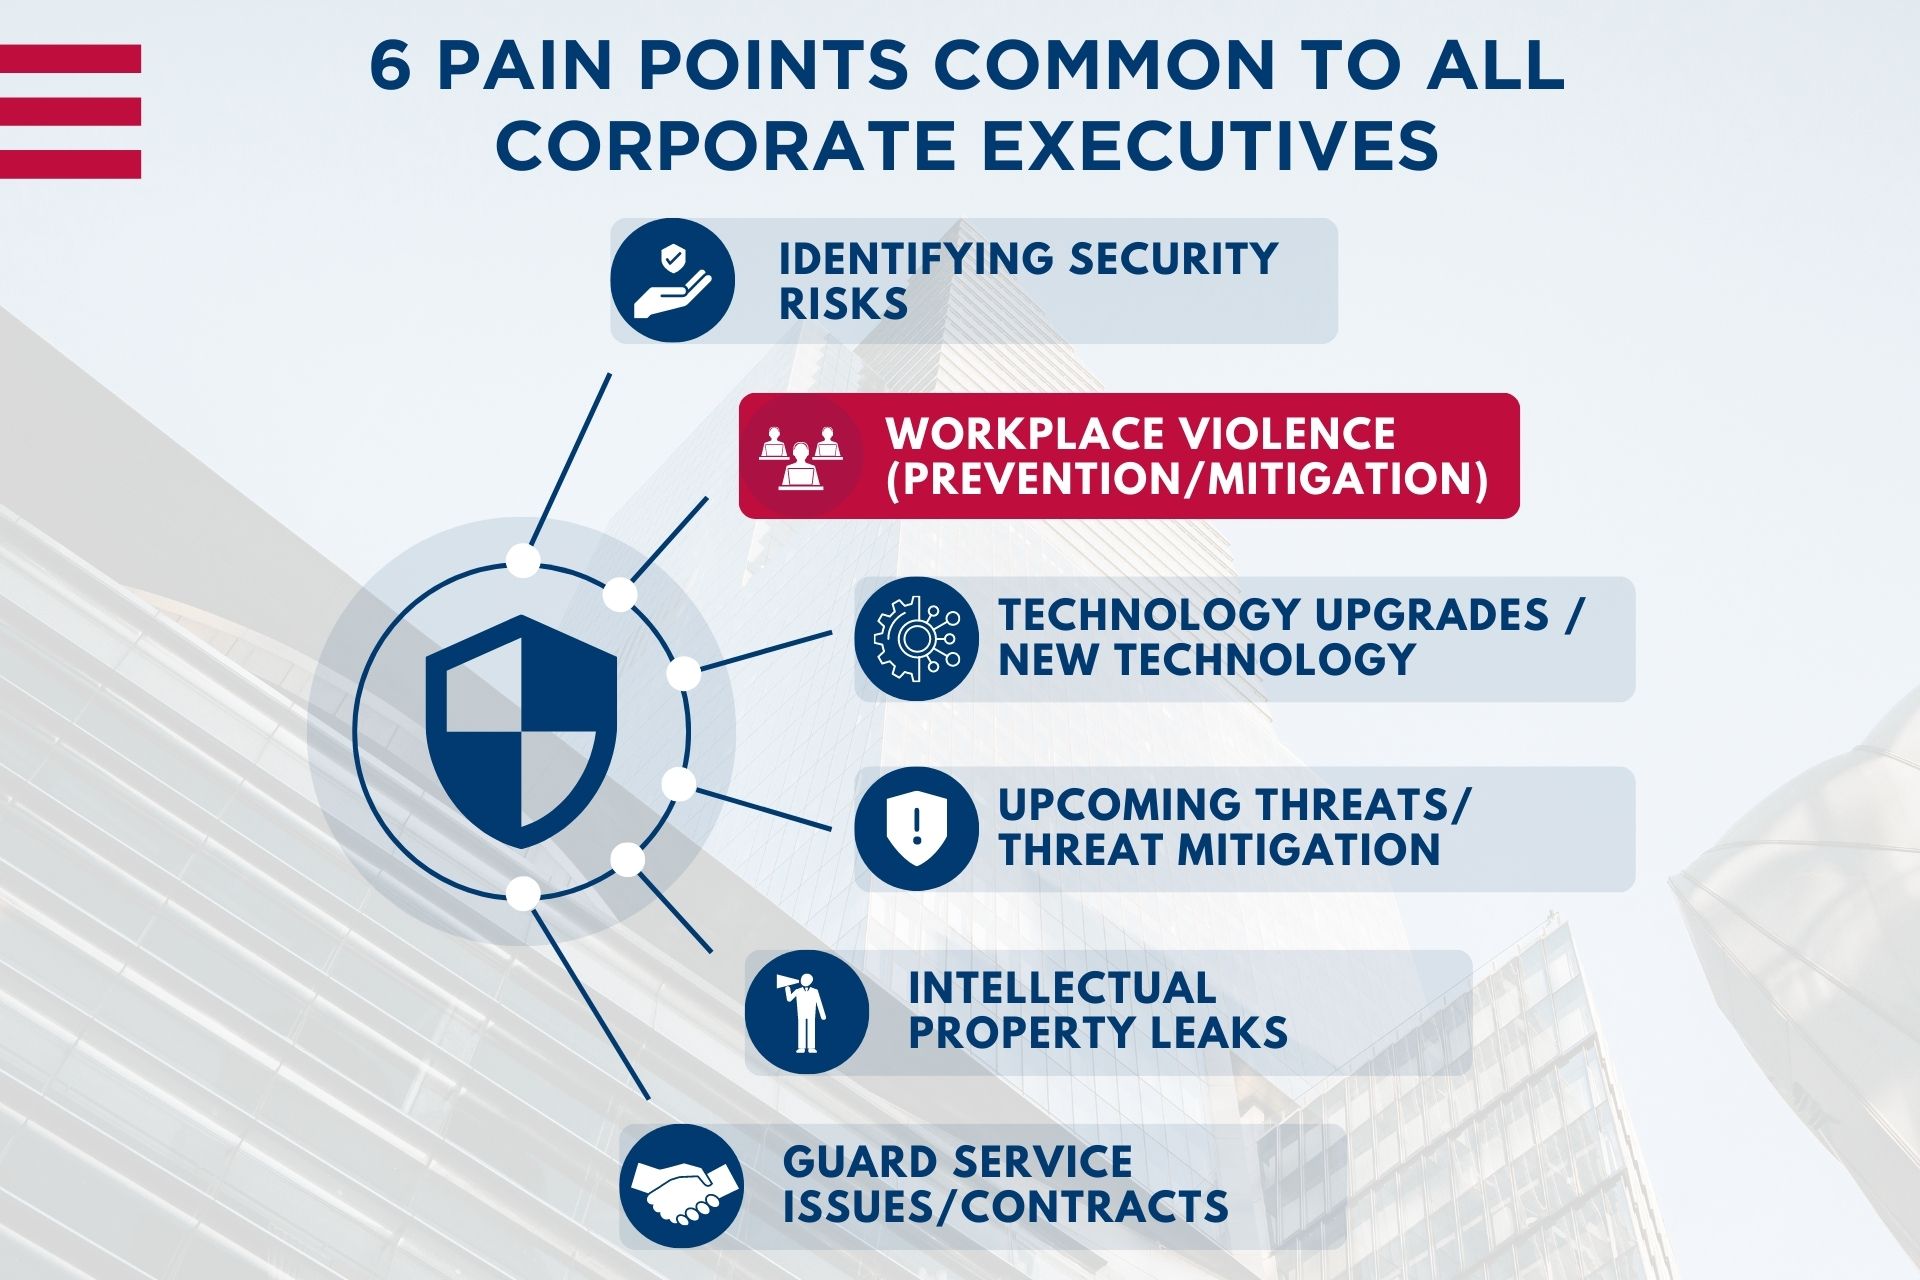 Workplace Violence (Prevention/Mitigation)